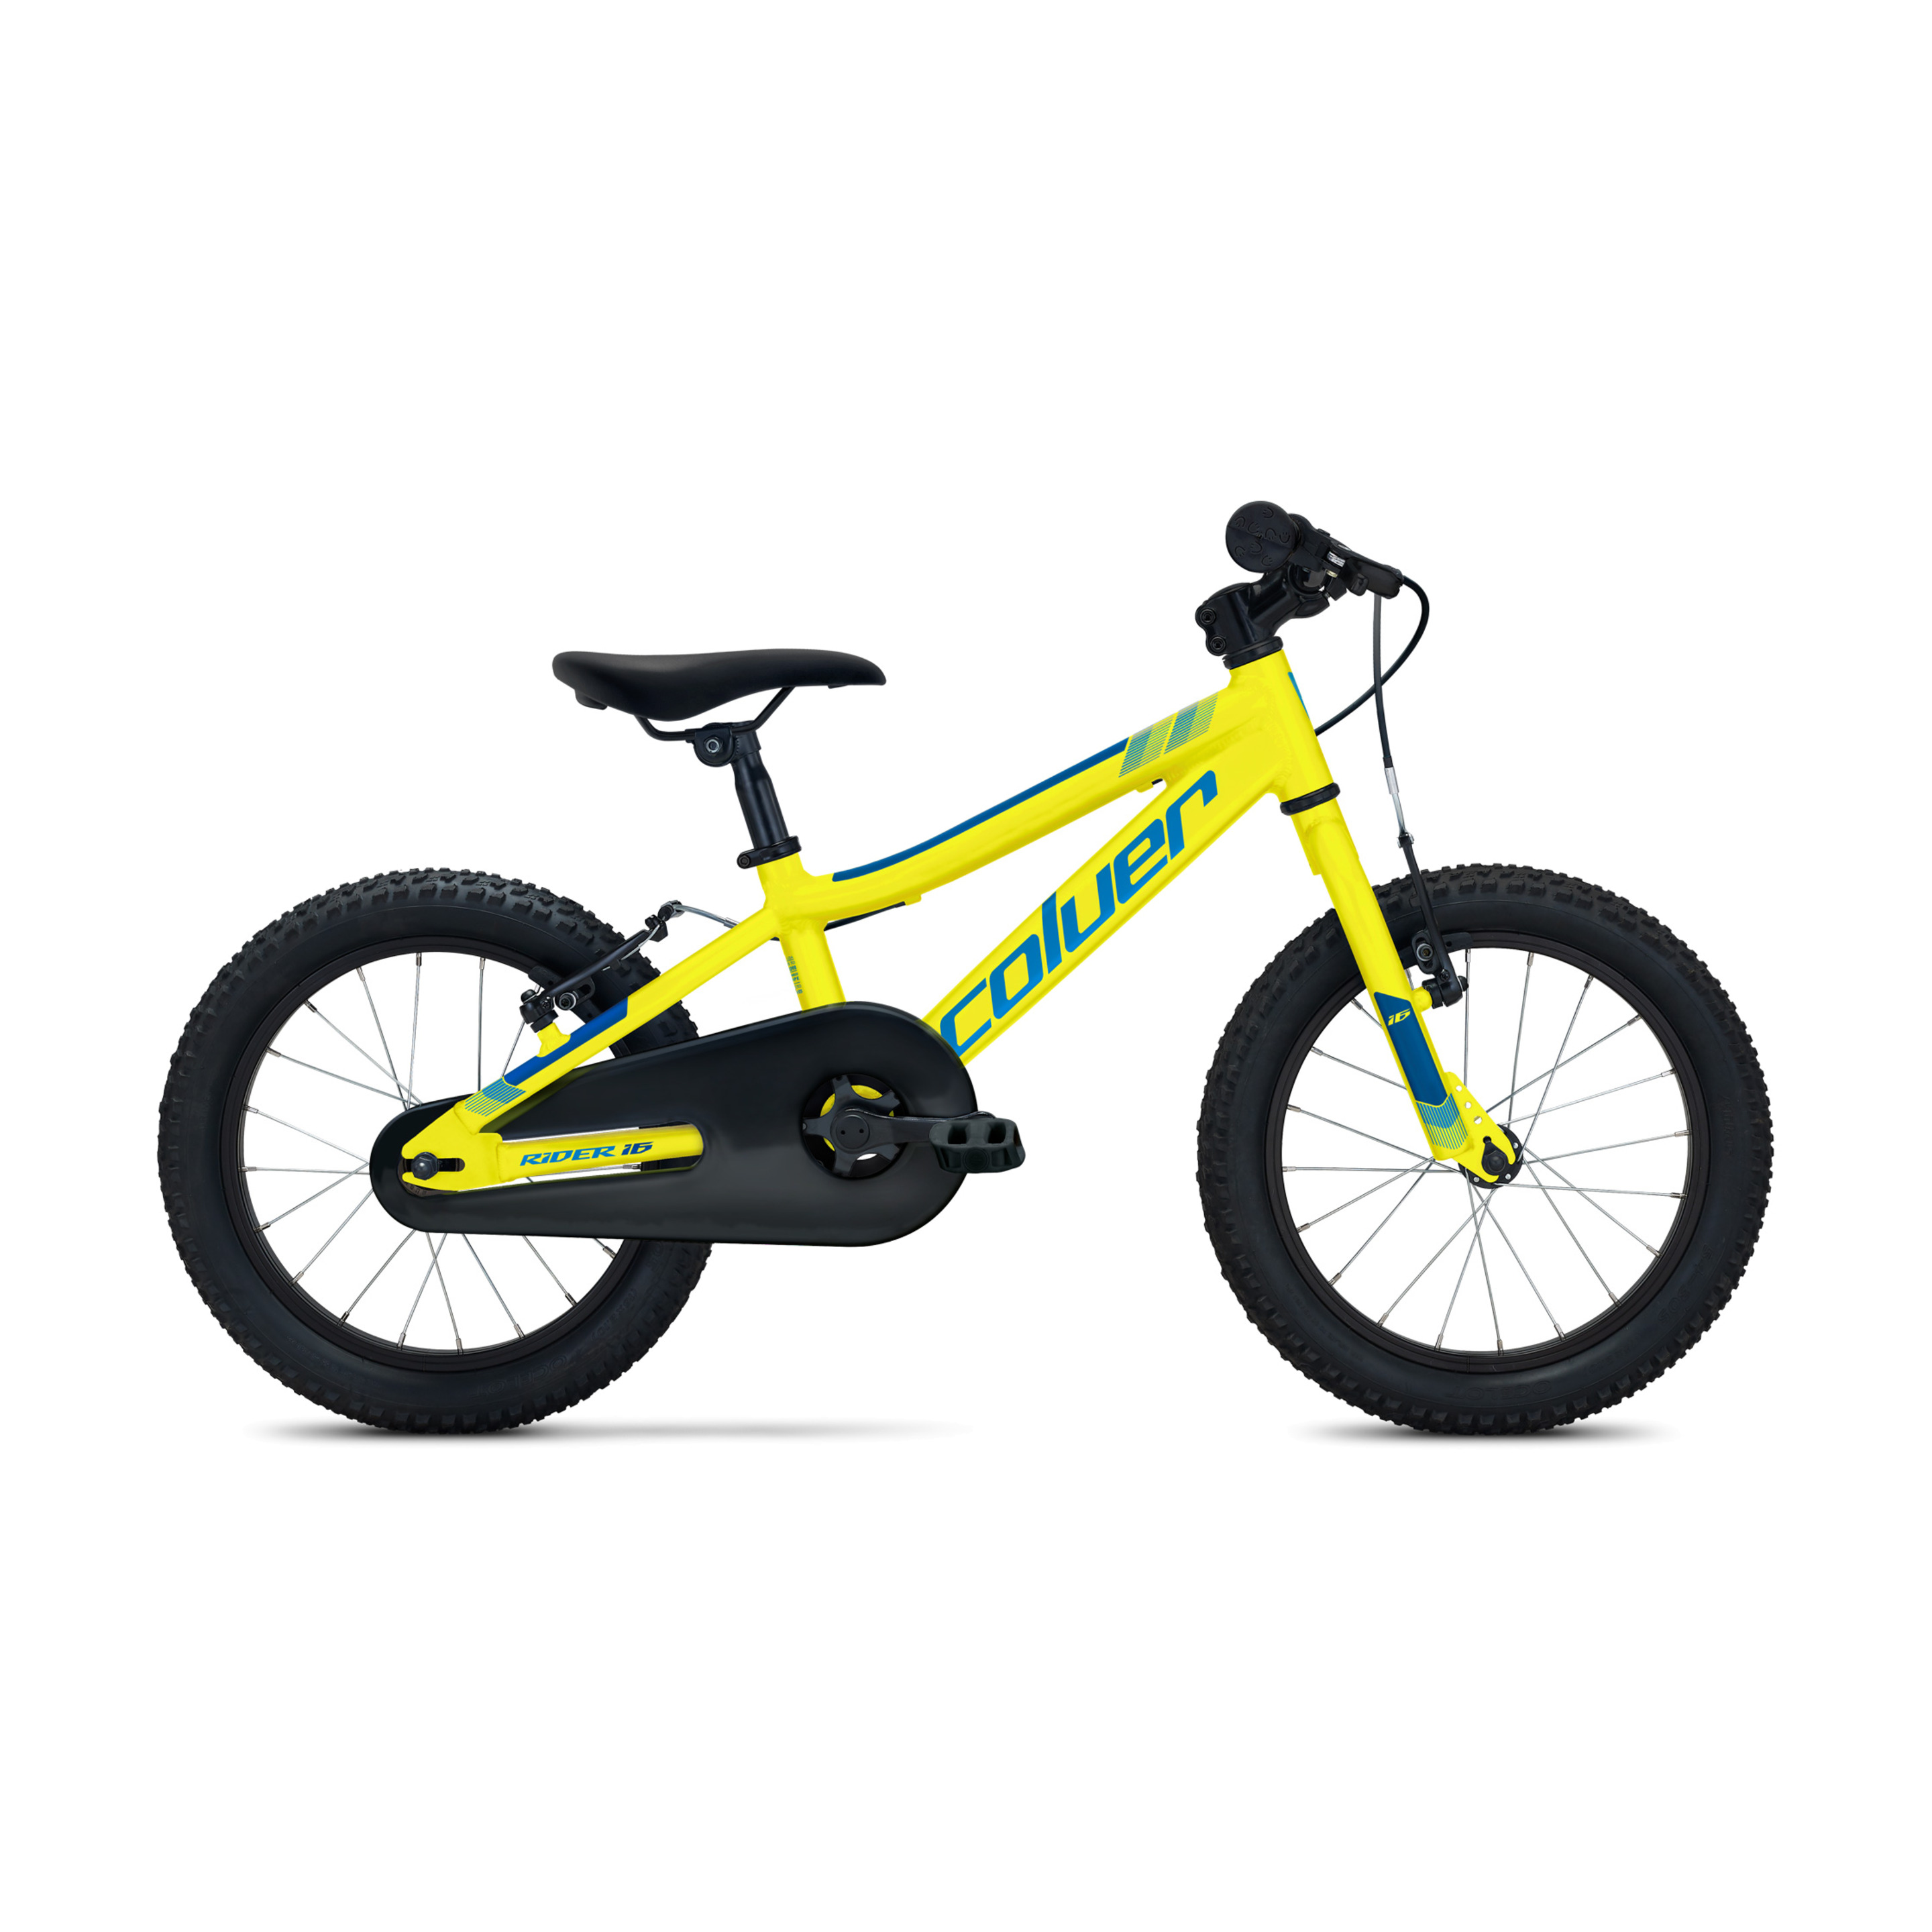 Bicicleta Coluer Raider - amarillo - 